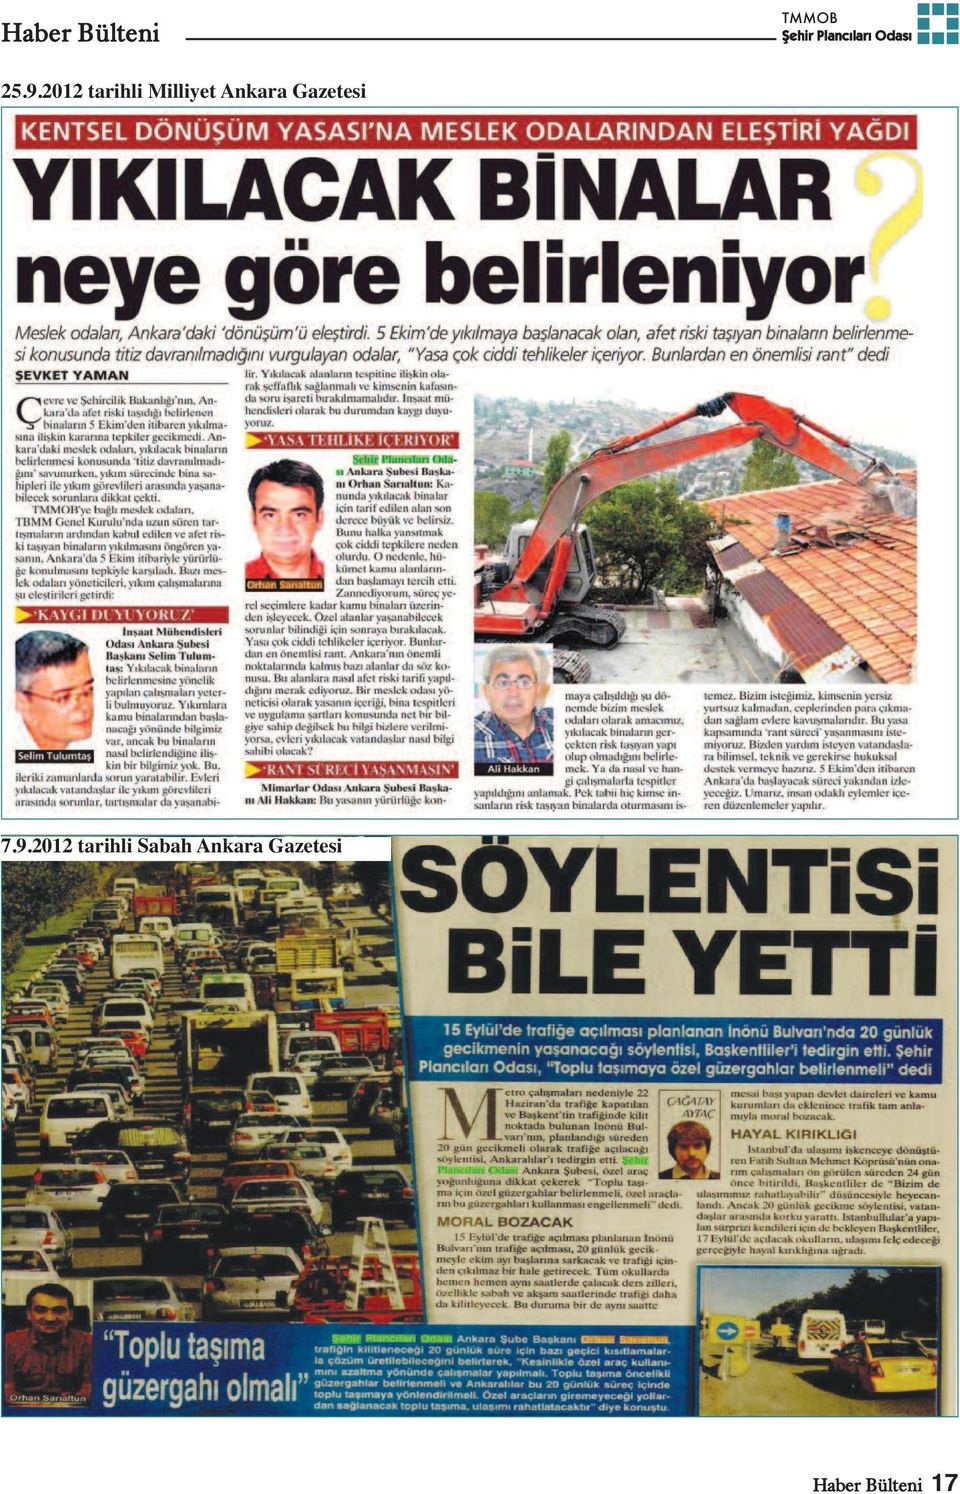 Ankara Gazetesi 7.9.